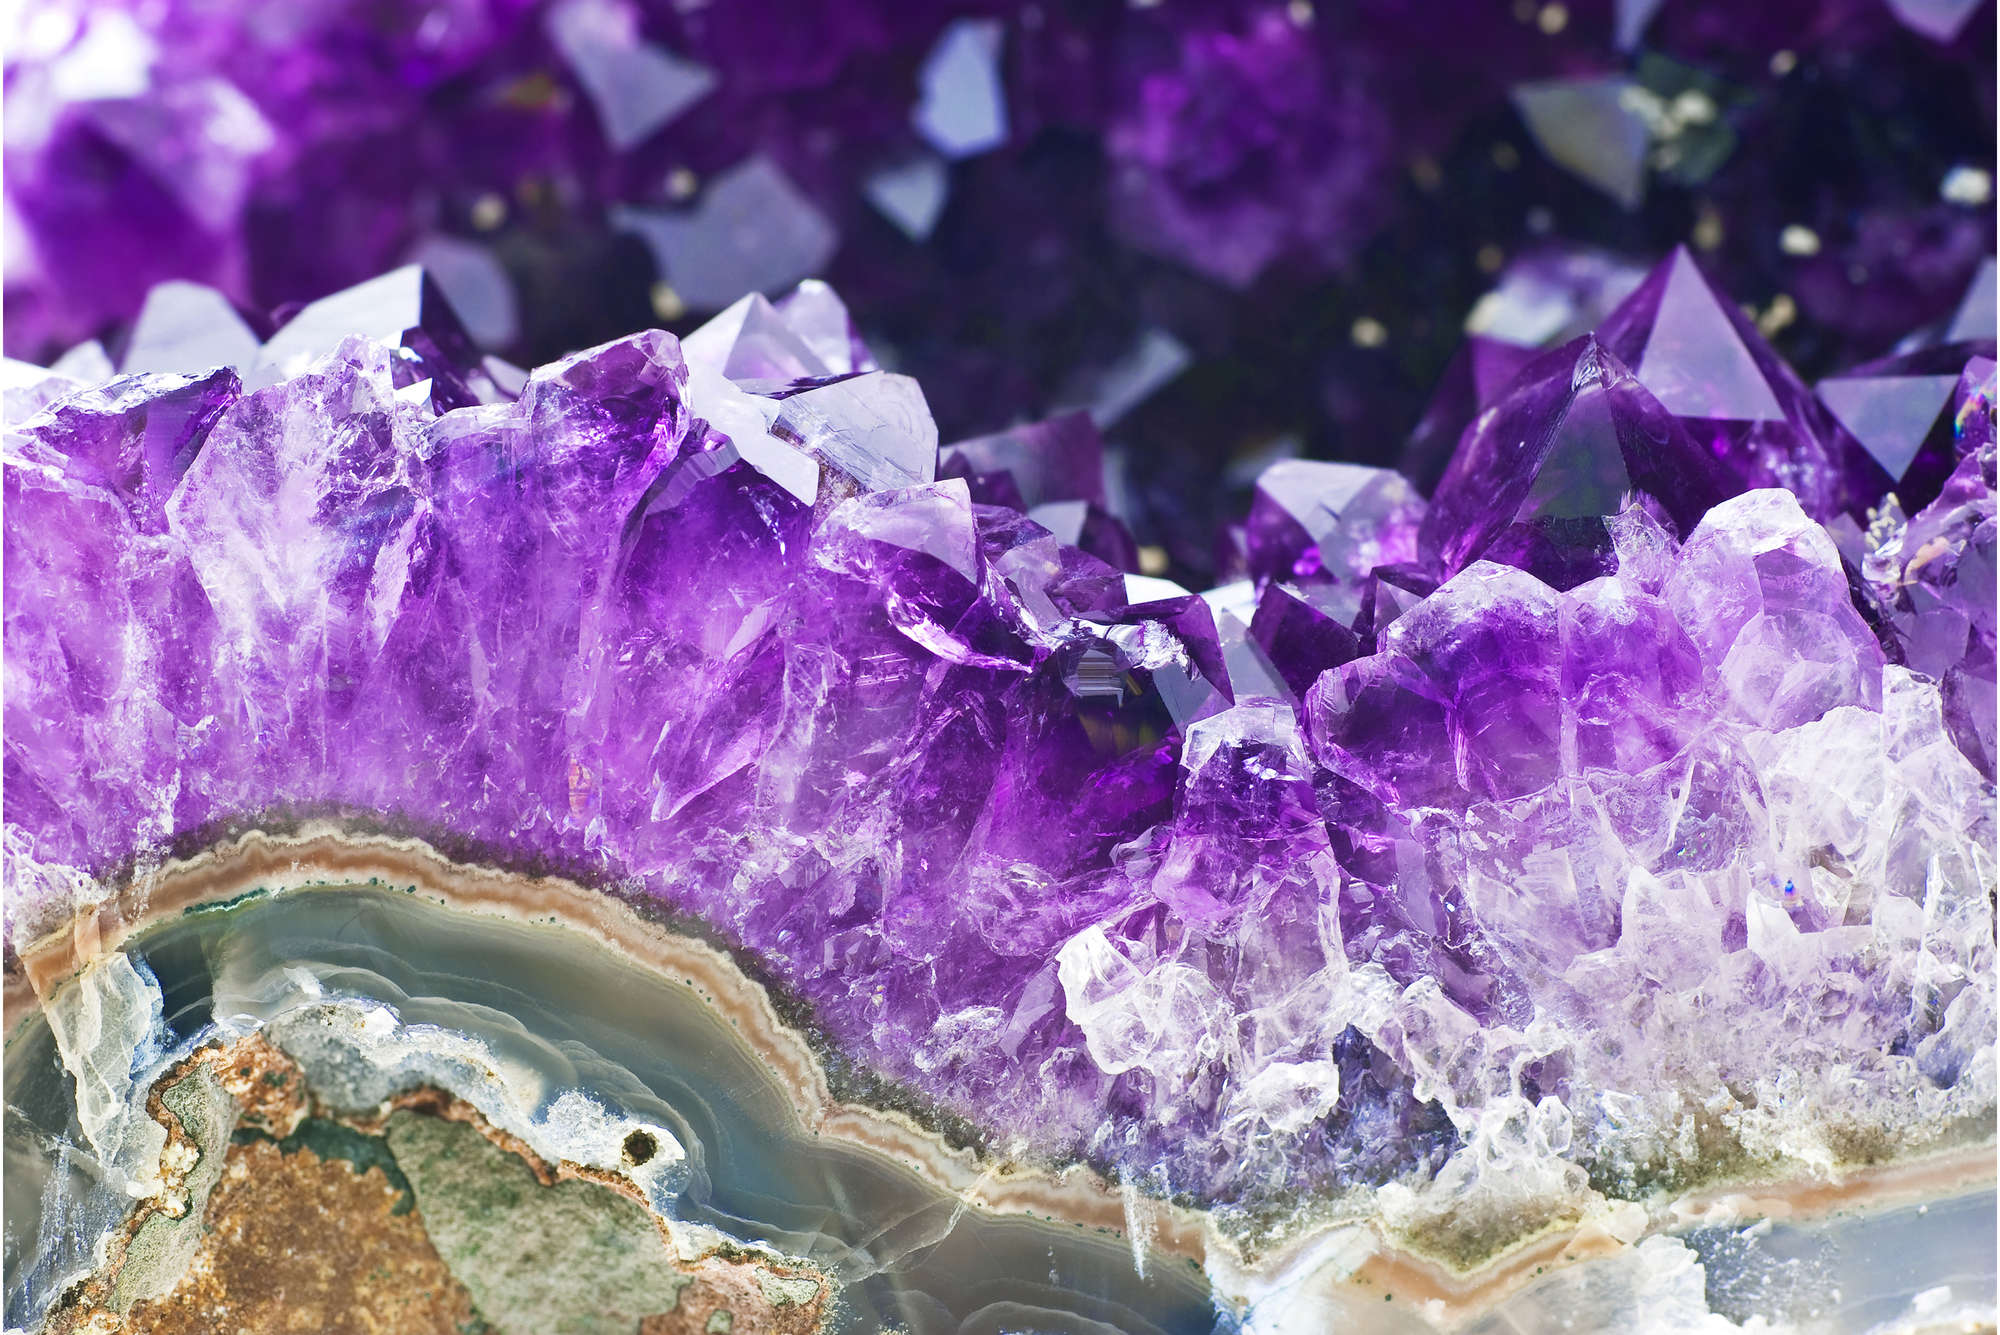             Amethist en kristallen in paars behang - Premium glad vlies
        